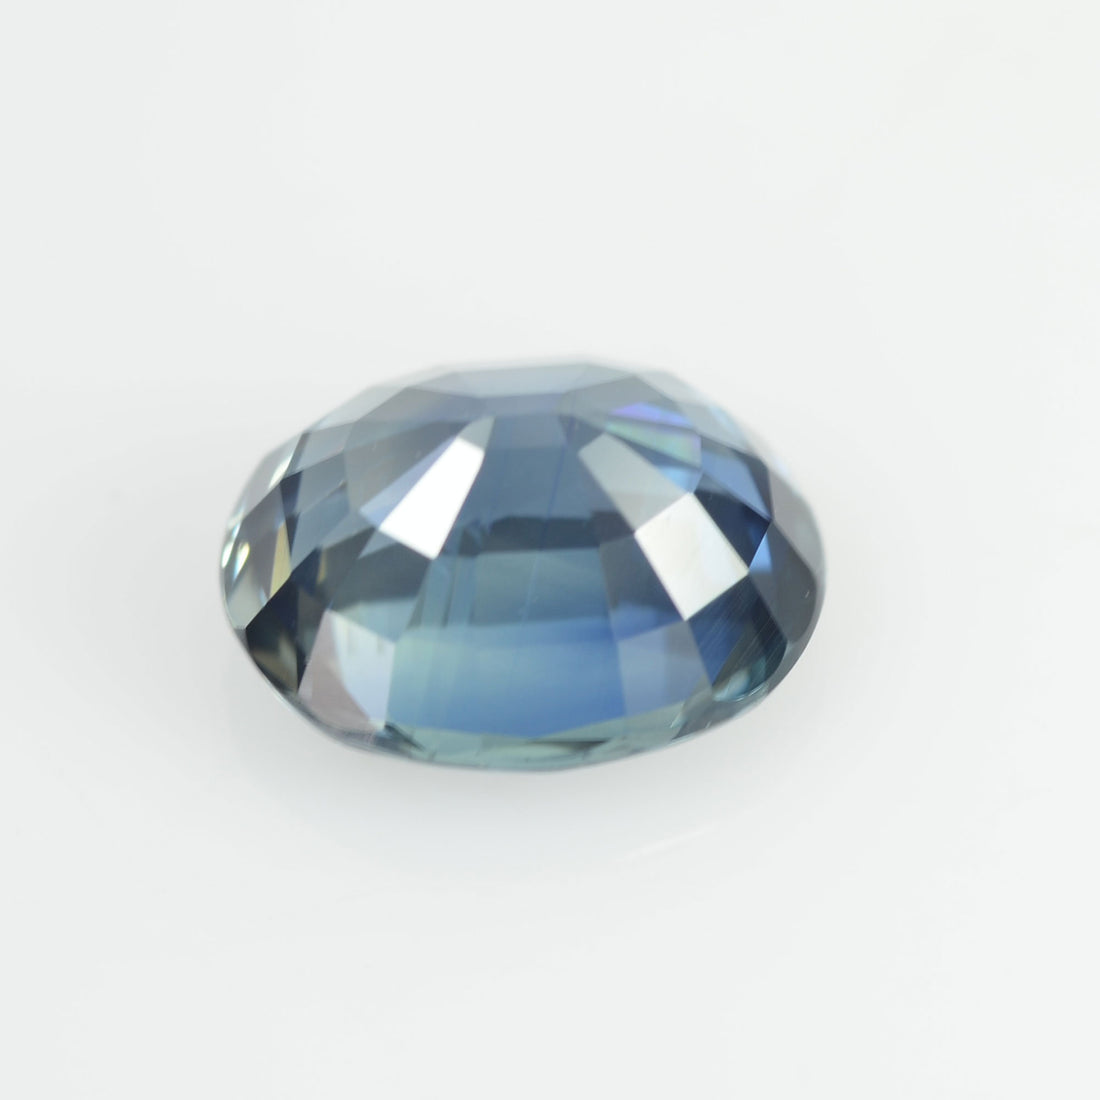 1.23 cts Natural Teal Blue Green Sapphire Loose Gemstone Oval Cut - Thai Gems Export Ltd.